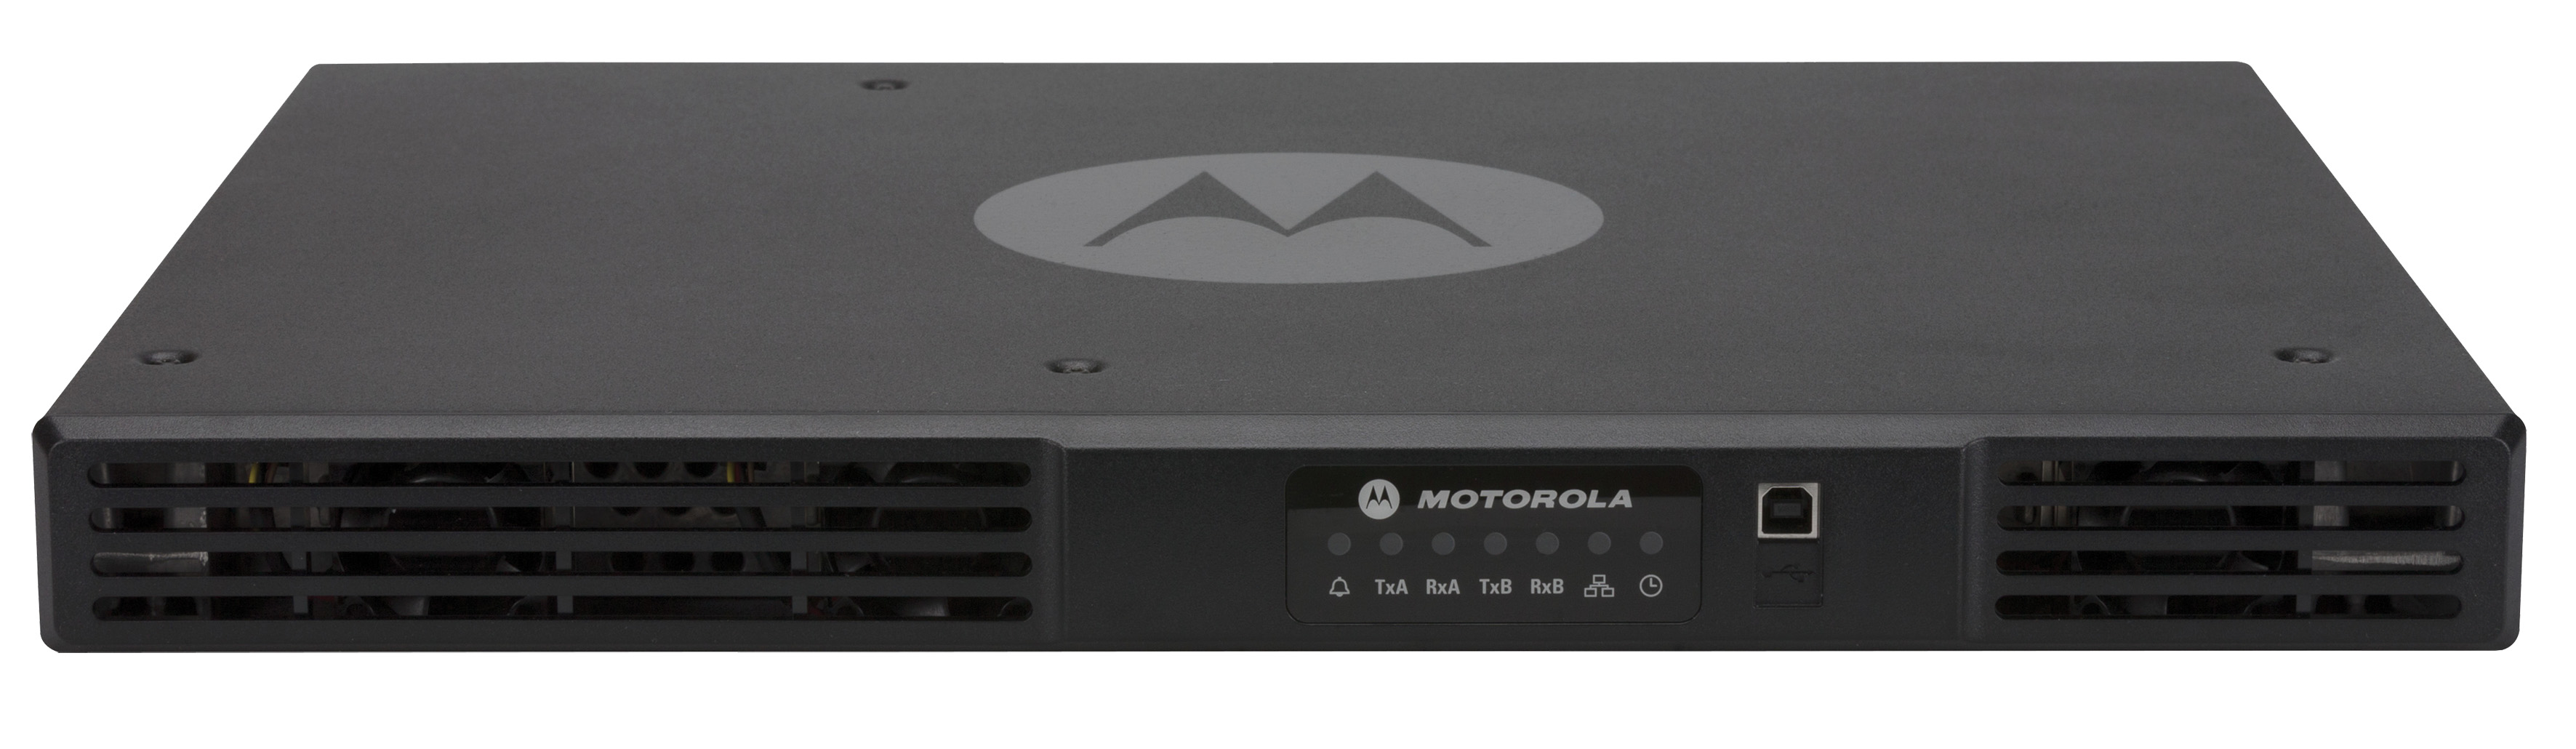 Motorola-SLR5000-Digital-Base-Repeater-24-5142.jpg